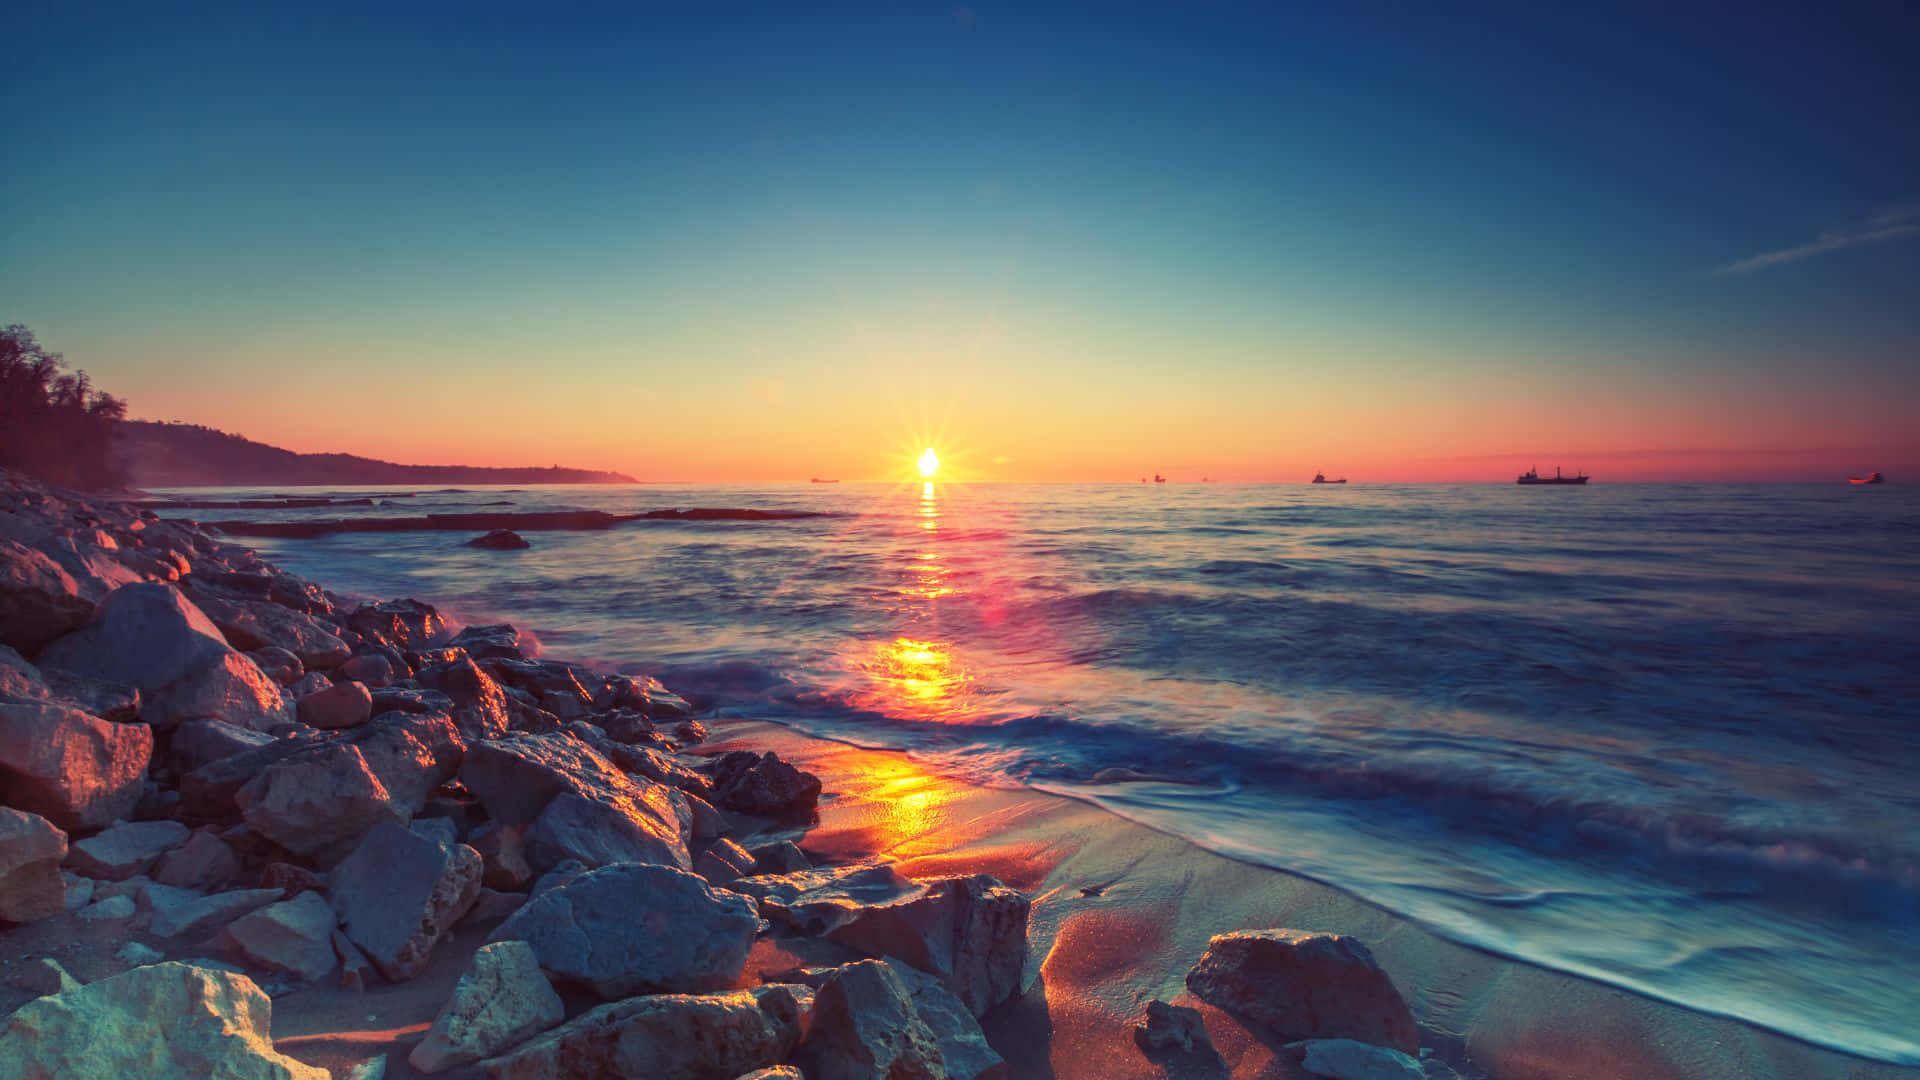 "A beautiful sunrise illuminates the horizon."